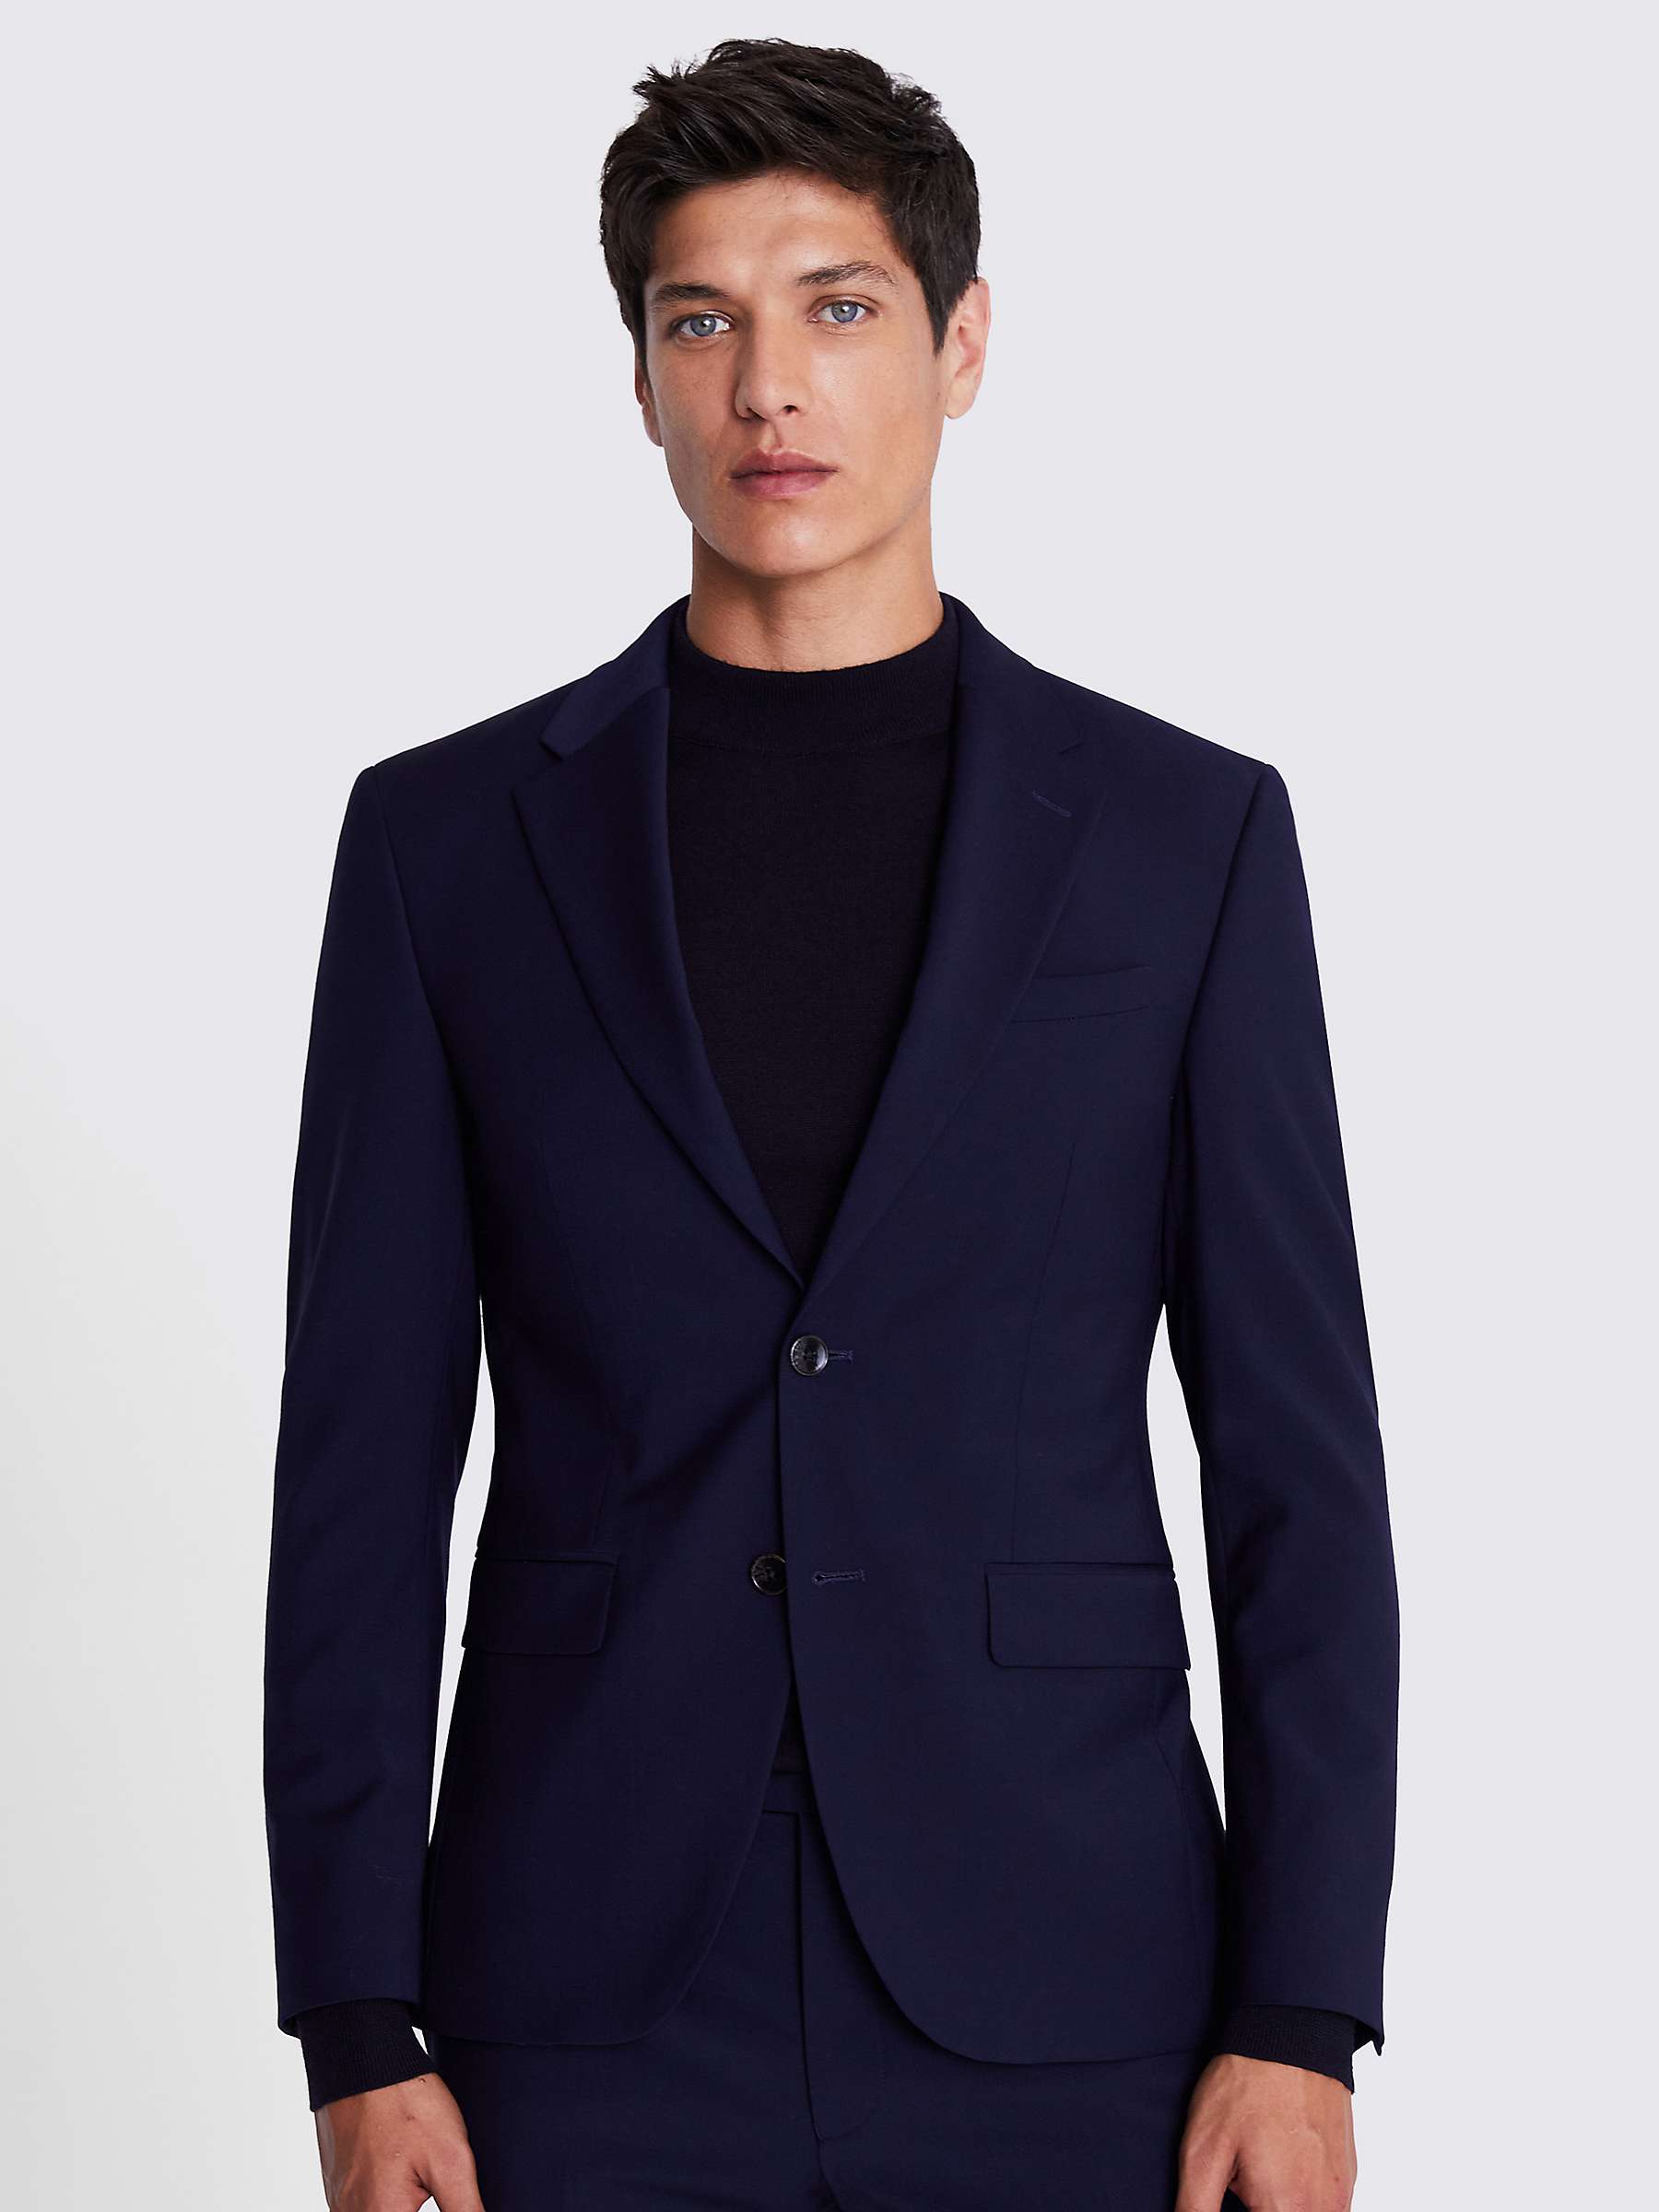 Buy Moss x DKNY Wool Blend Slim Fit Suit Jacket Online at johnlewis.com